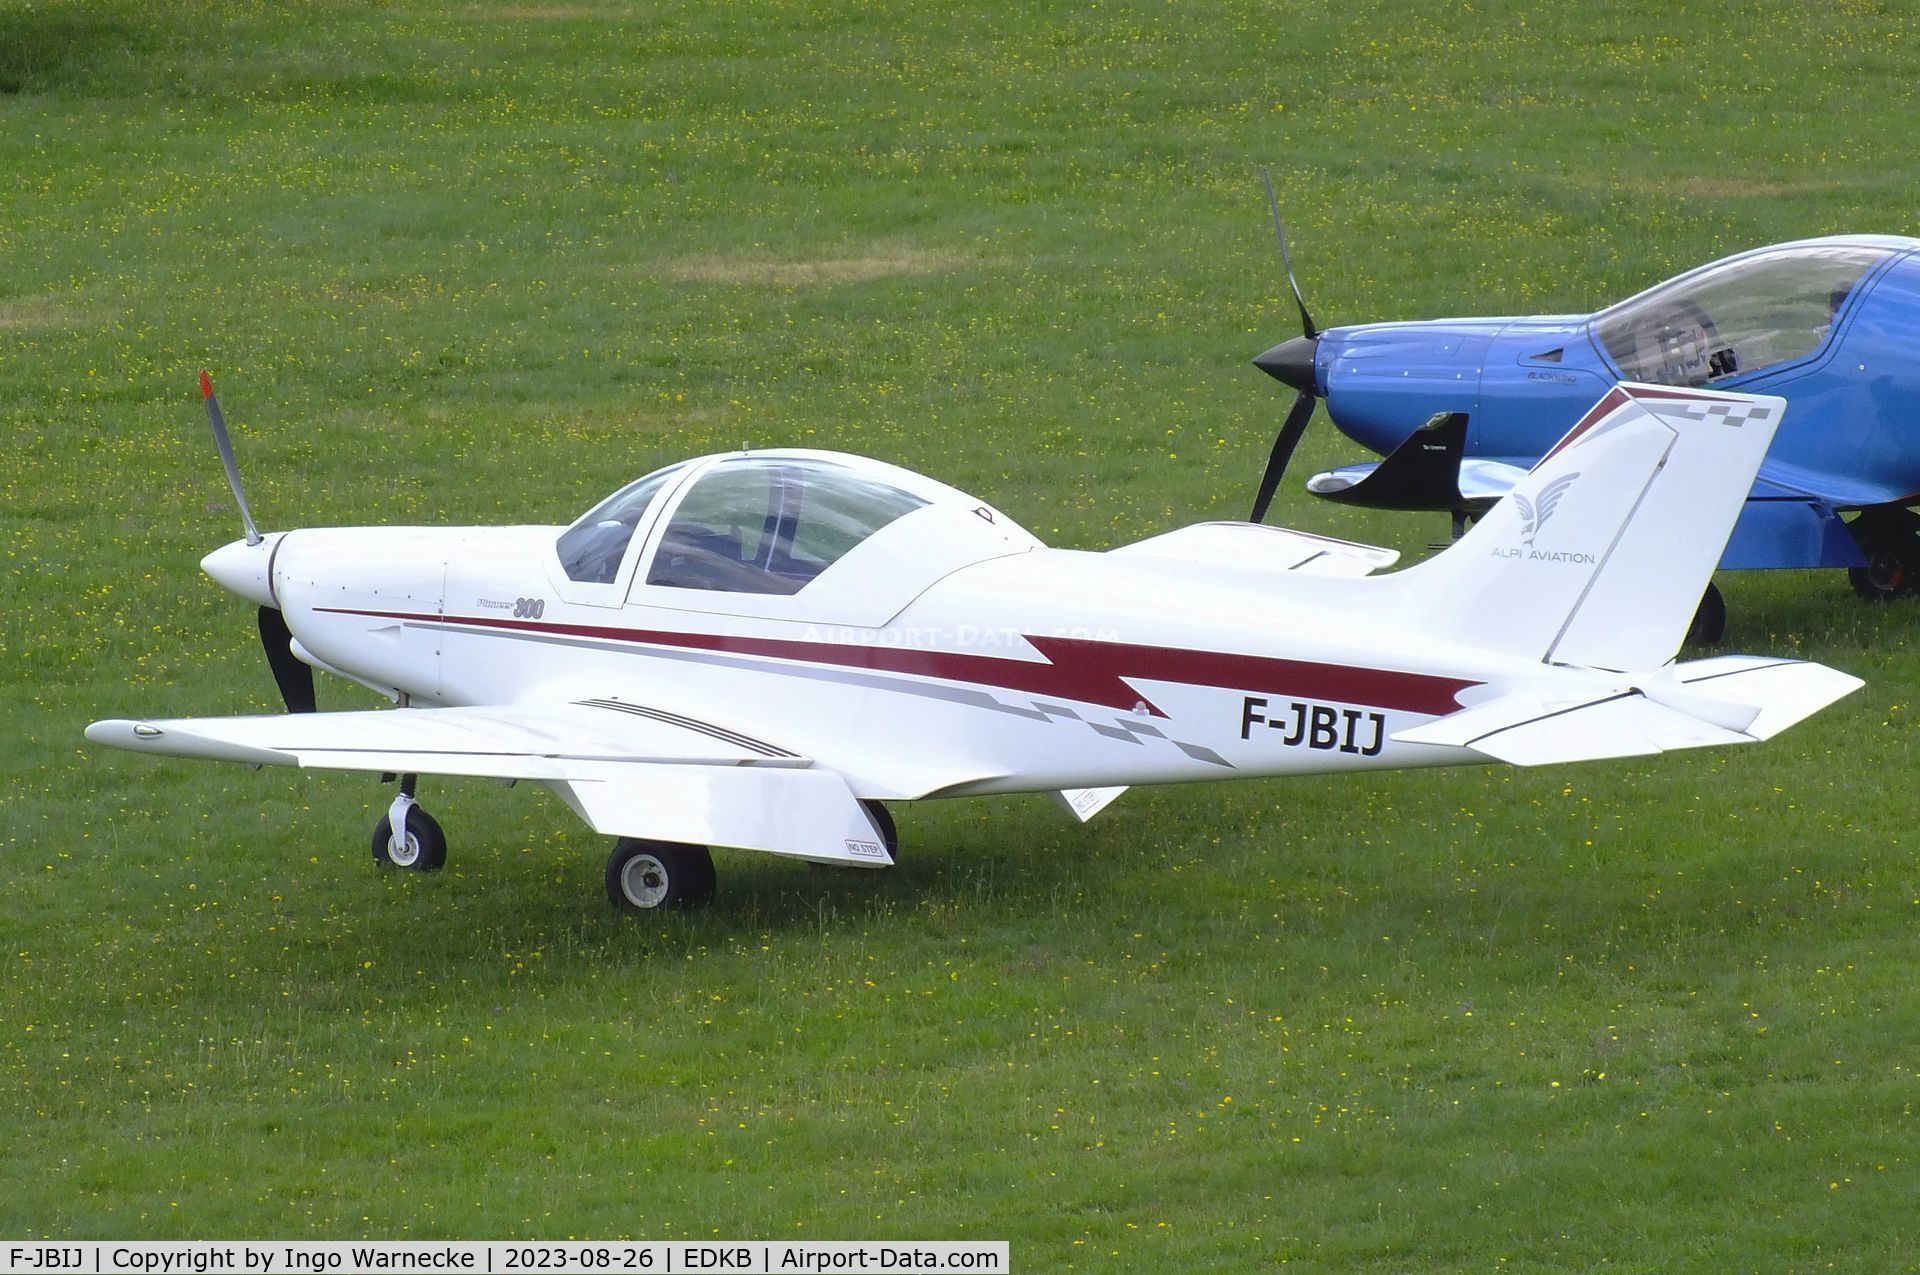 F-JBIJ, Alpi Aviation Pioneer 300 C/N 437, Alpi Aviation Pioneer 300 at Bonn-Hangelar airfield during the Grumman Fly-in 2023